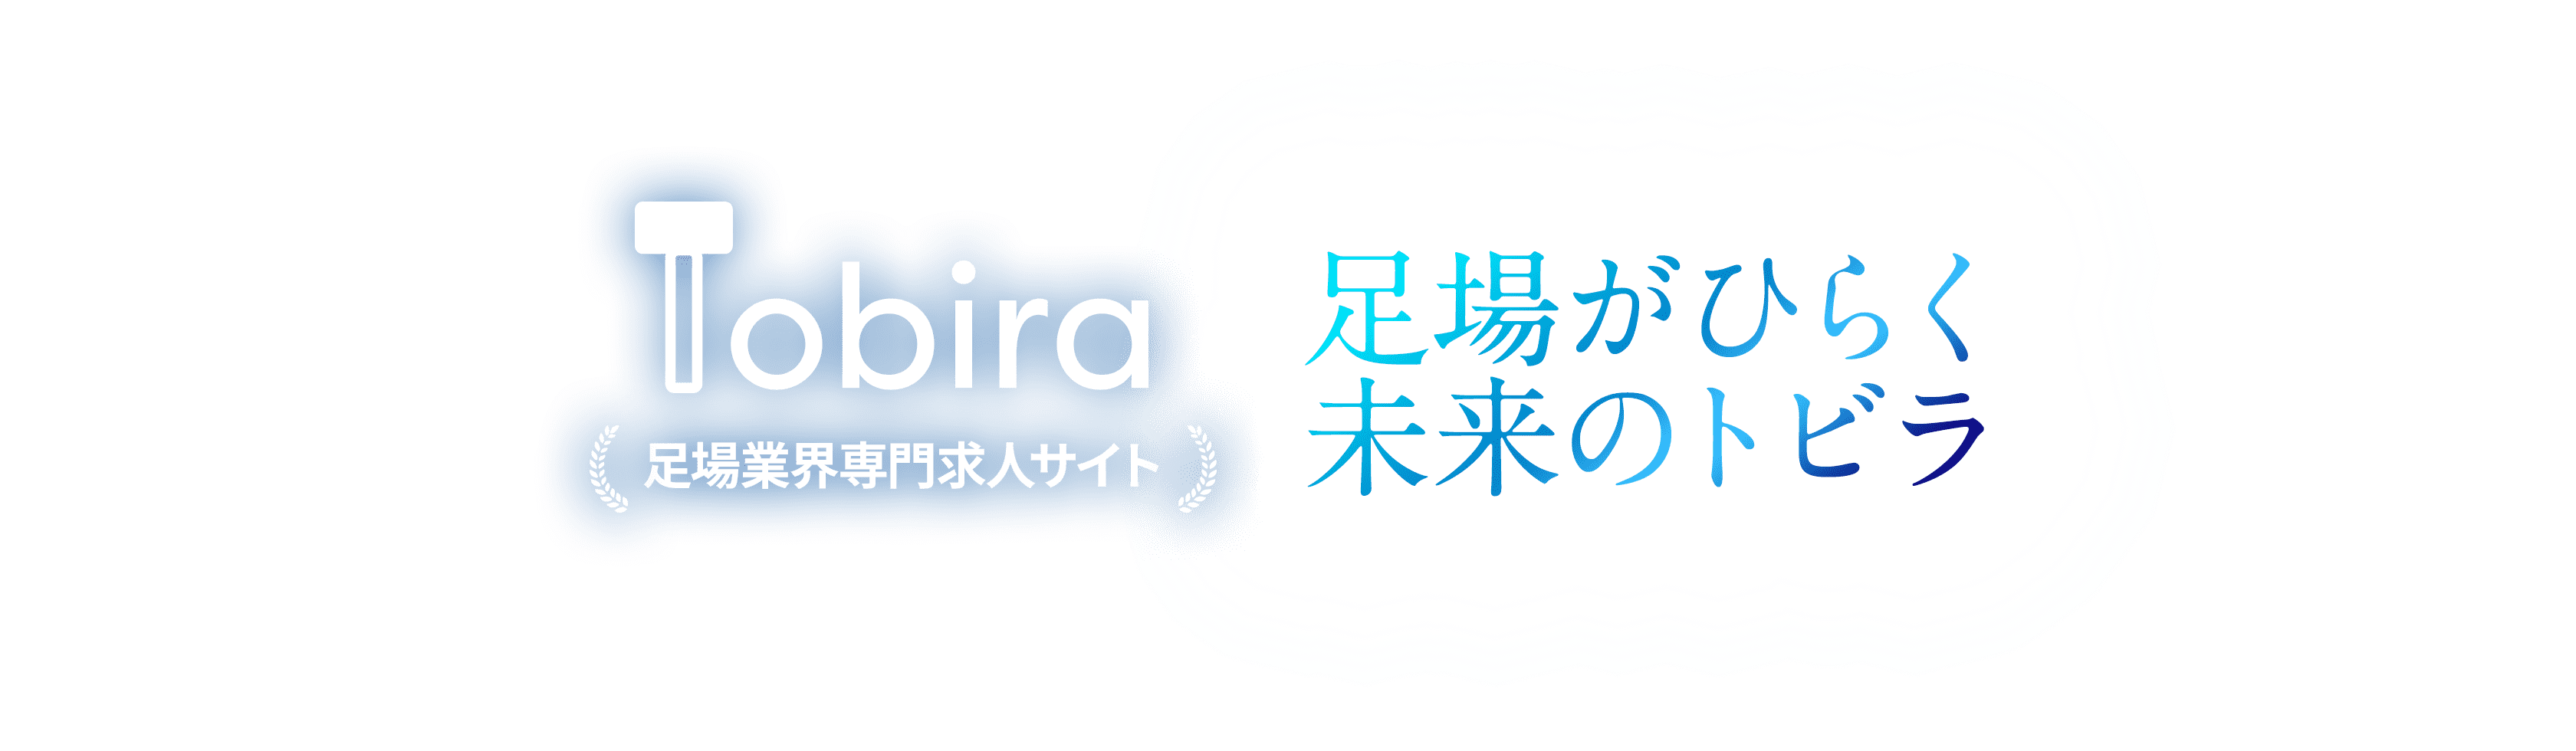 Tobira - 足場業界専門求人サイト 足場がひらく未来のトビラ